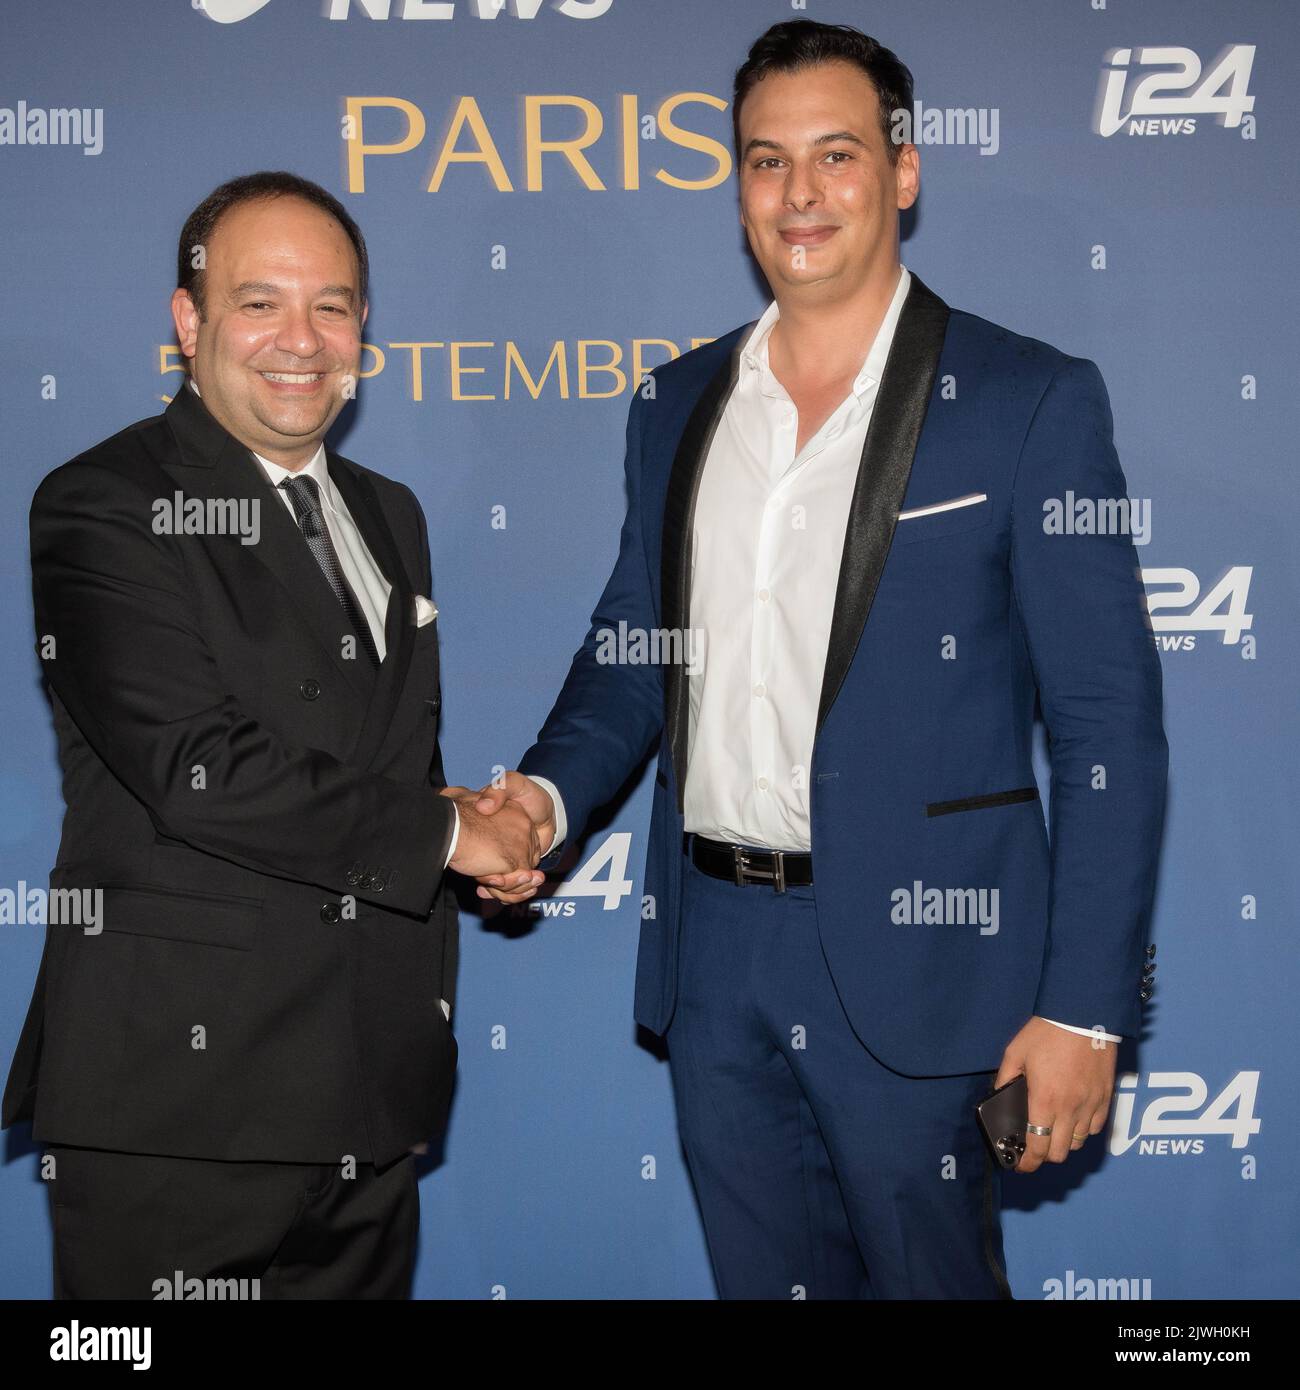 Le Grand Gala d'i24NEWS a eu lieu lundi soir à Paris France, 05/09/2022. Stock Photo